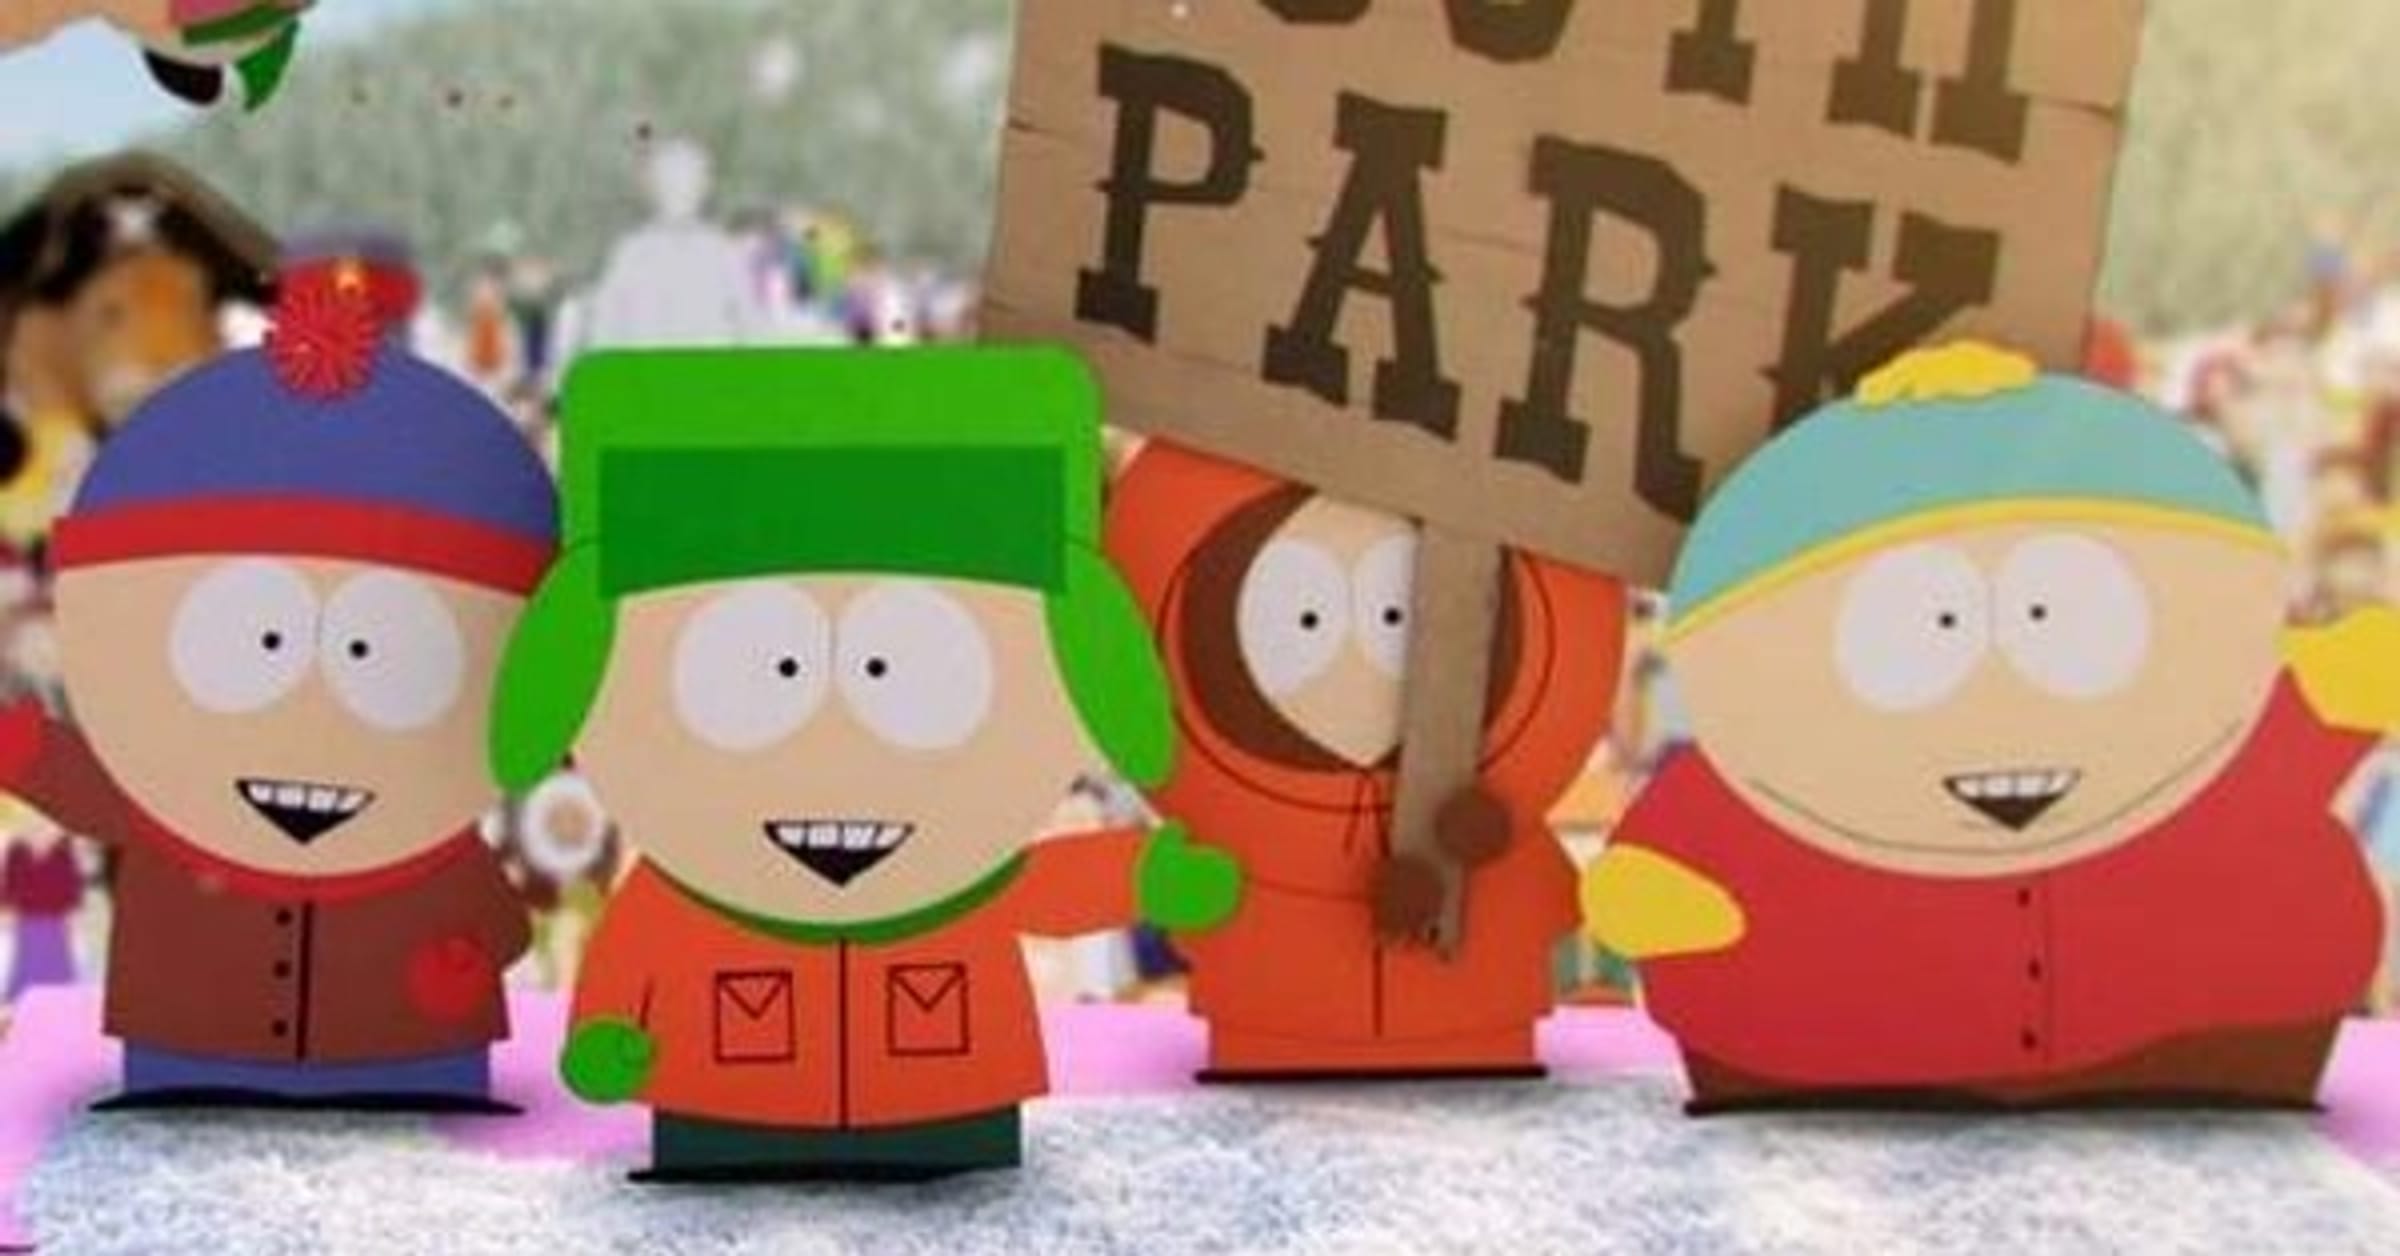 South Park Elementary Adult Short Sleeve T-Shirt – South Park Shop